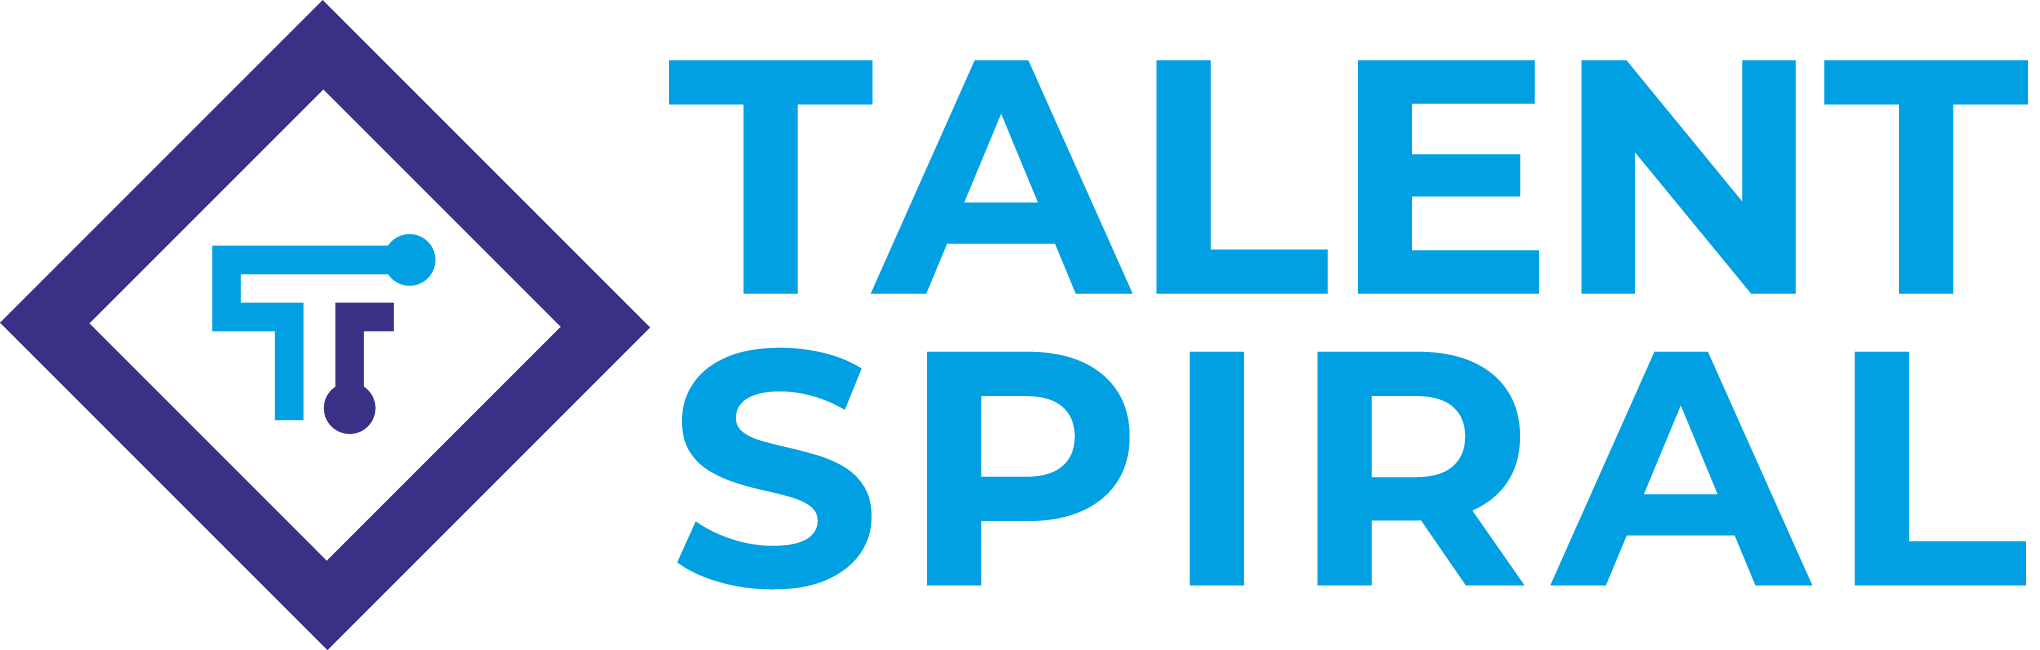 Talent Spiral Logo